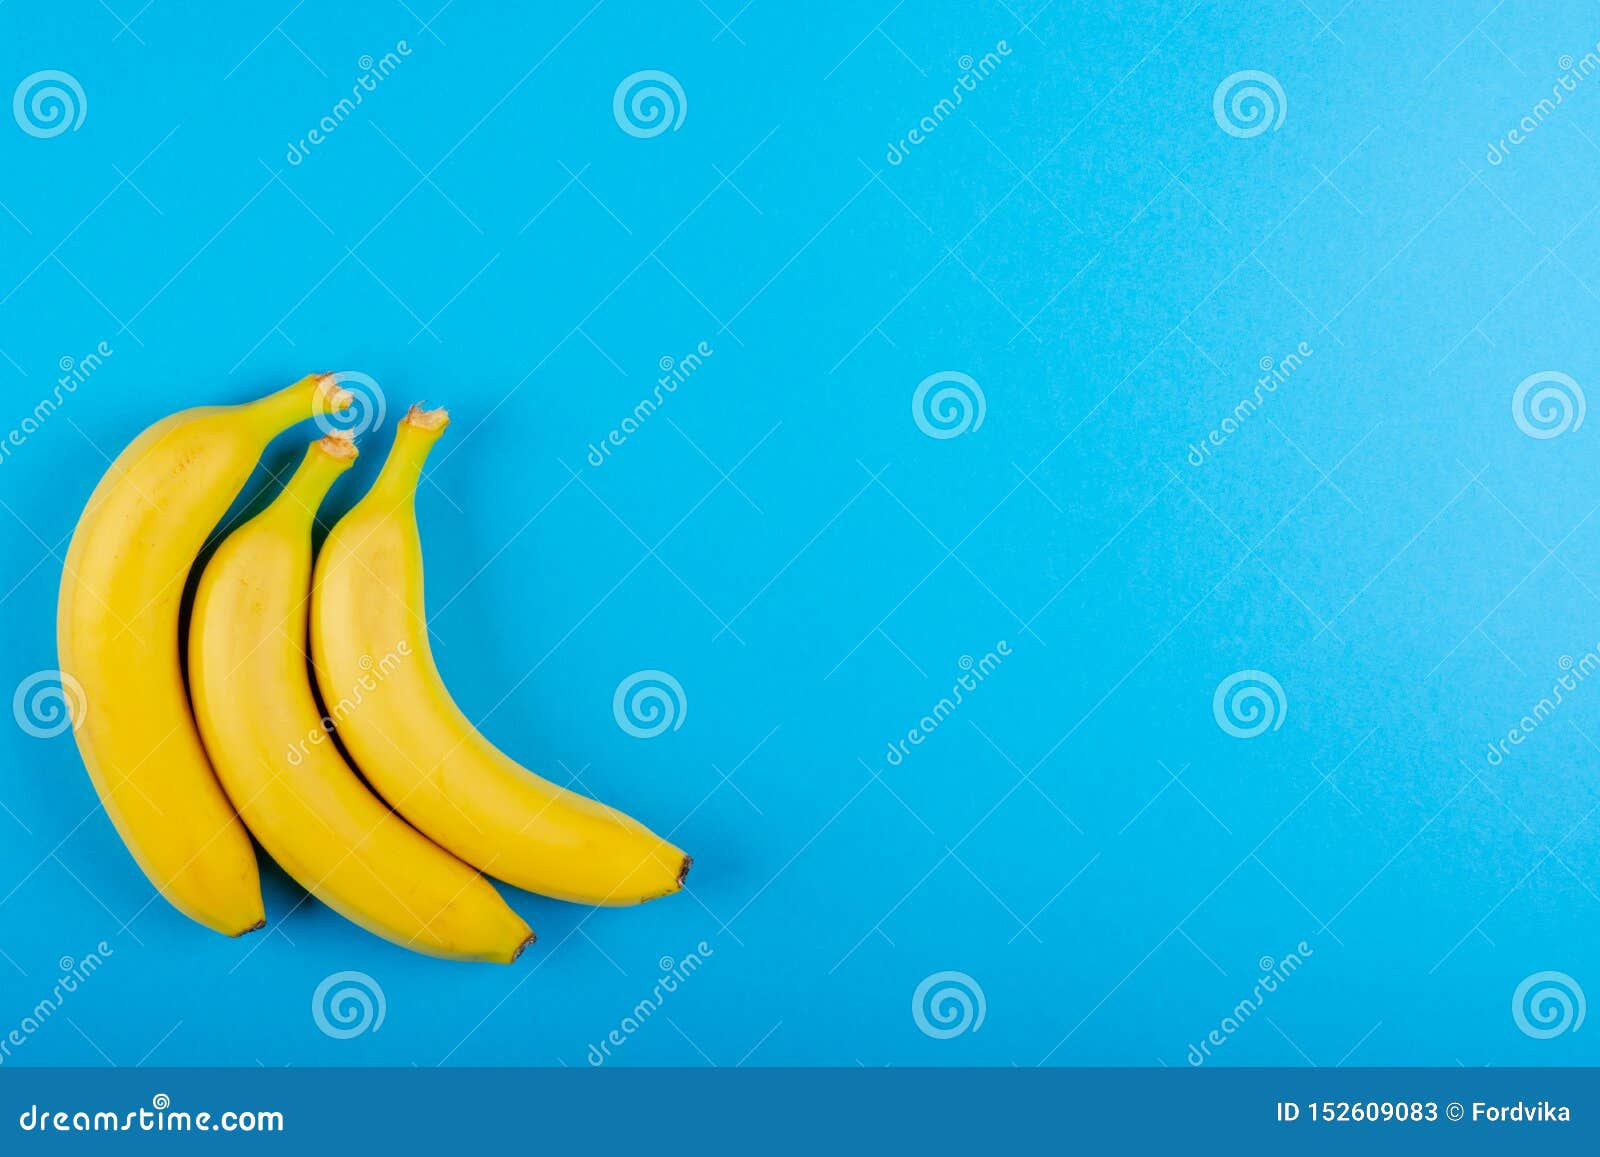 Three Bananas on a Blue Background Stock Image - Image of idea ...